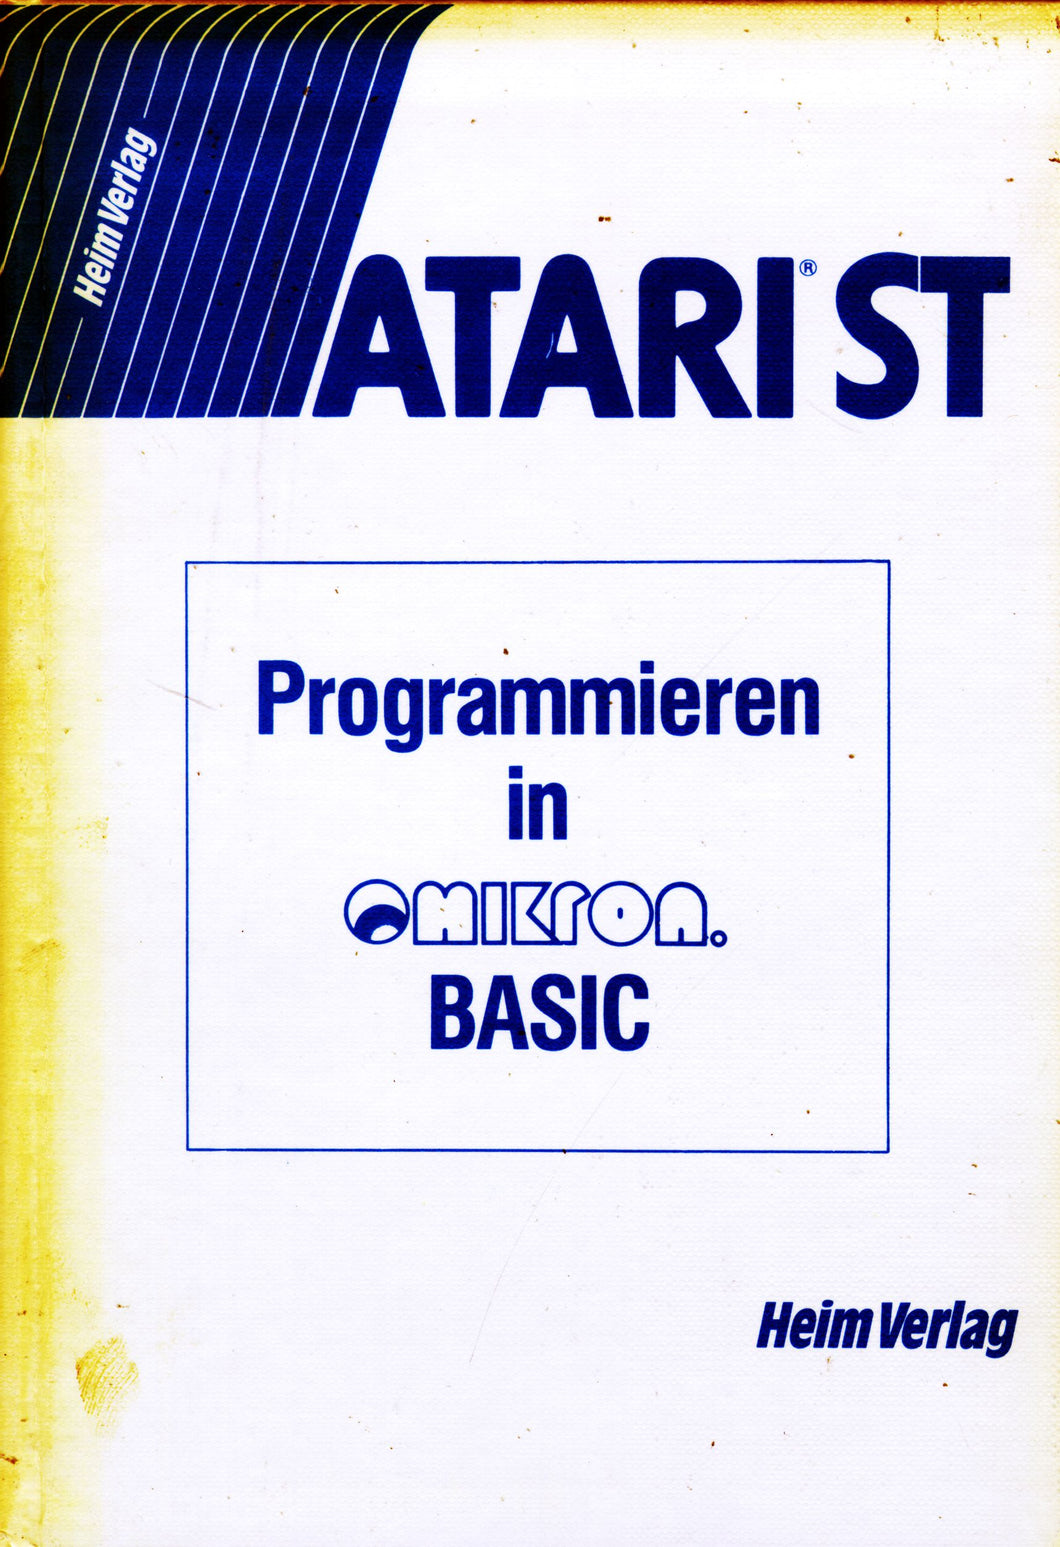 ATARI ST Programmieren in OMIKRON BASIC Vorderseite